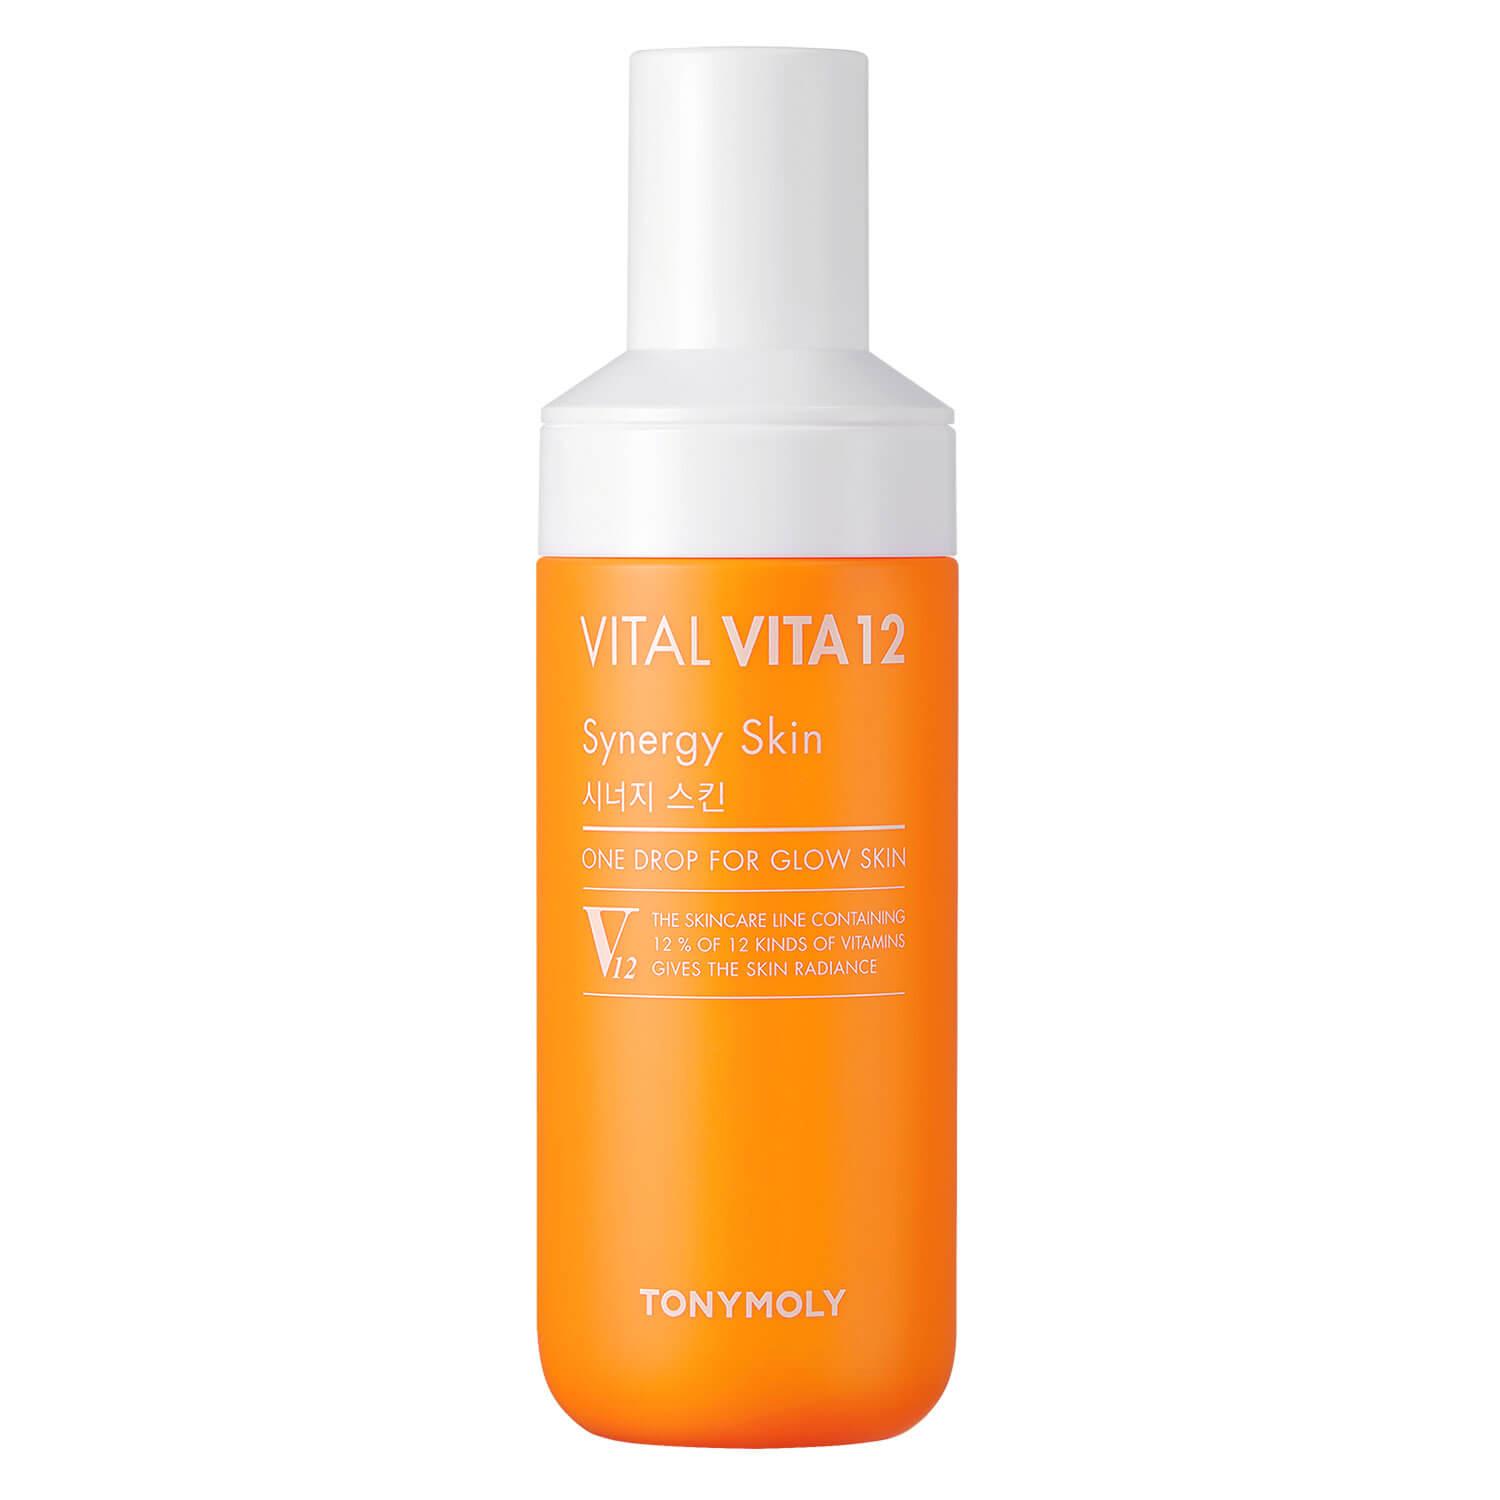 VITAL VITA 12 - Synergy Skin Toner